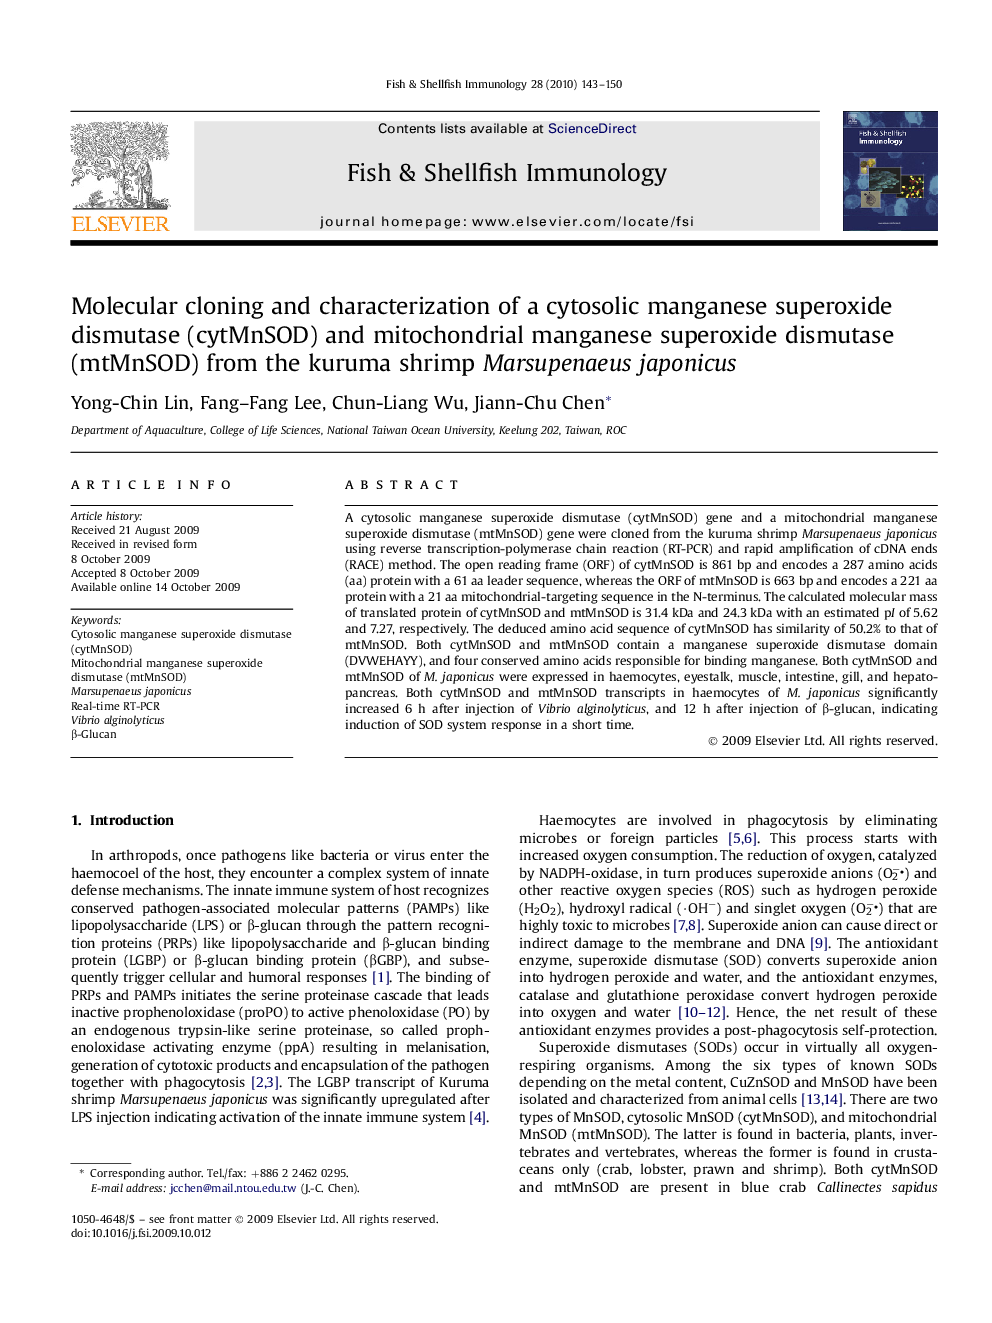 Molecular cloning and characterization of a cytosolic manganese superoxide dismutase (cytMnSOD) and mitochondrial manganese superoxide dismutase (mtMnSOD) from the kuruma shrimp Marsupenaeus japonicus